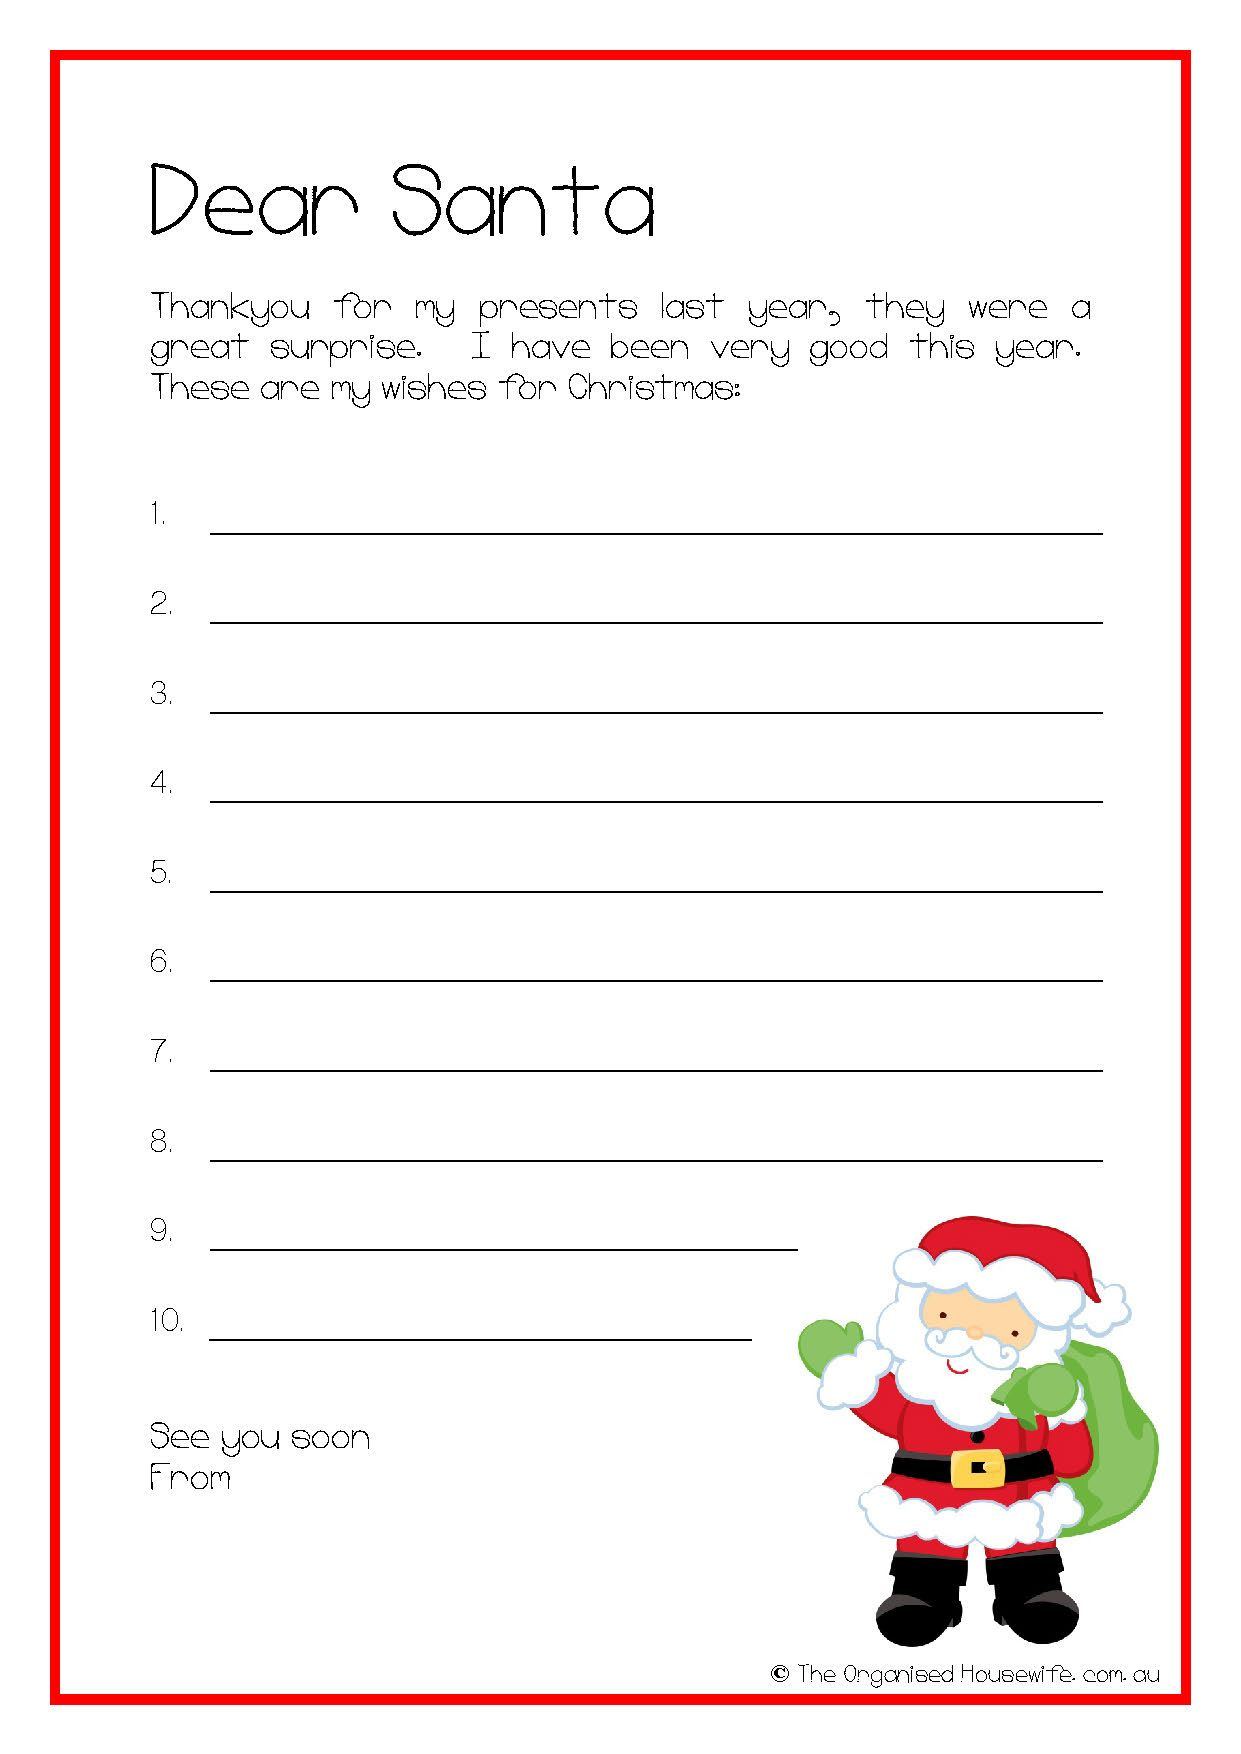 Free Printable Letter From Santa Template Word - Printable Kids Wish List to Santa Pinterest